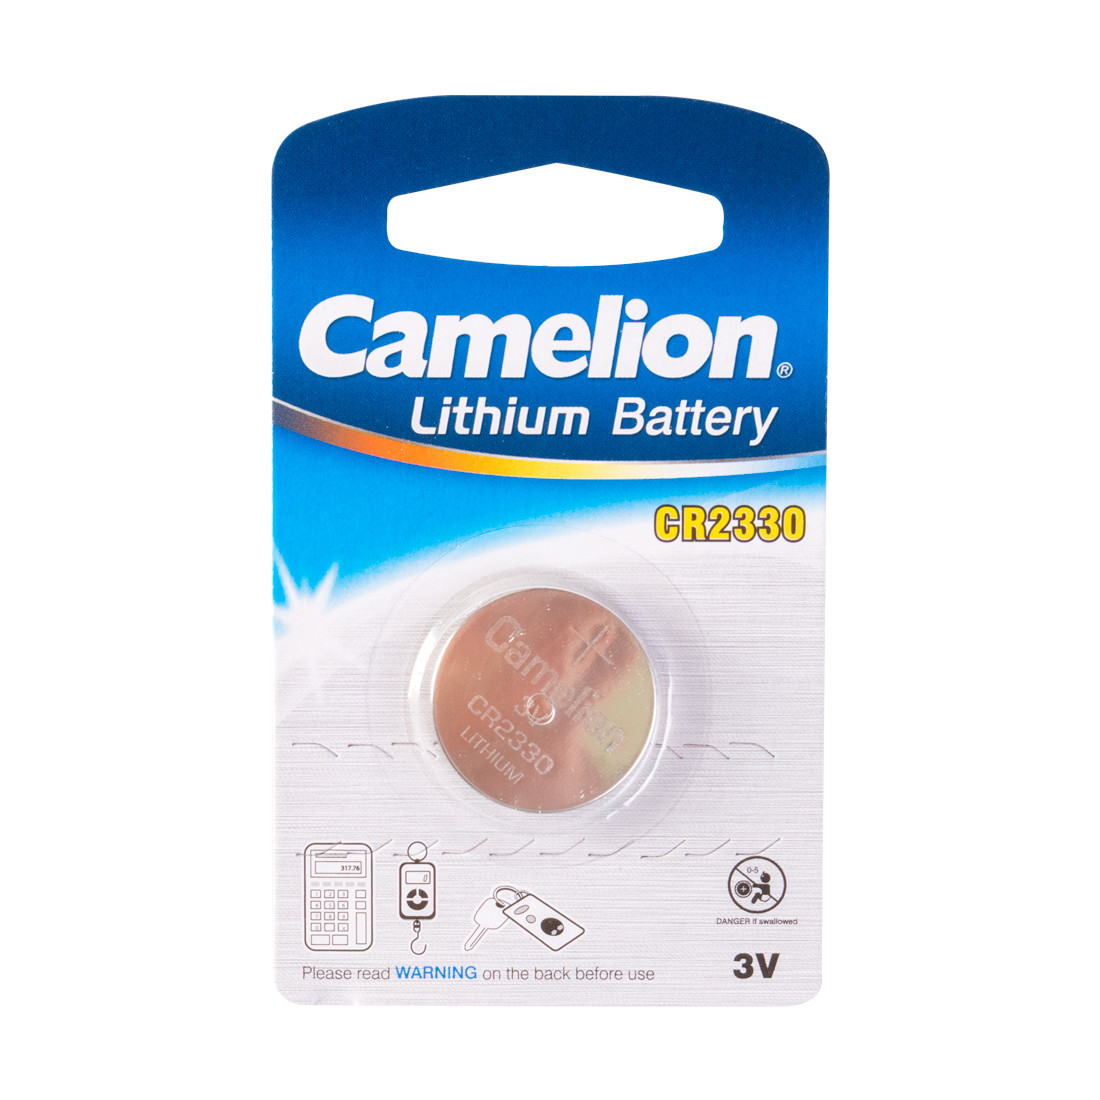 Camelion CR2330-BP1 Батарейка Lithium Battery, CR2330, 3V, 220 mAh, 1 шт